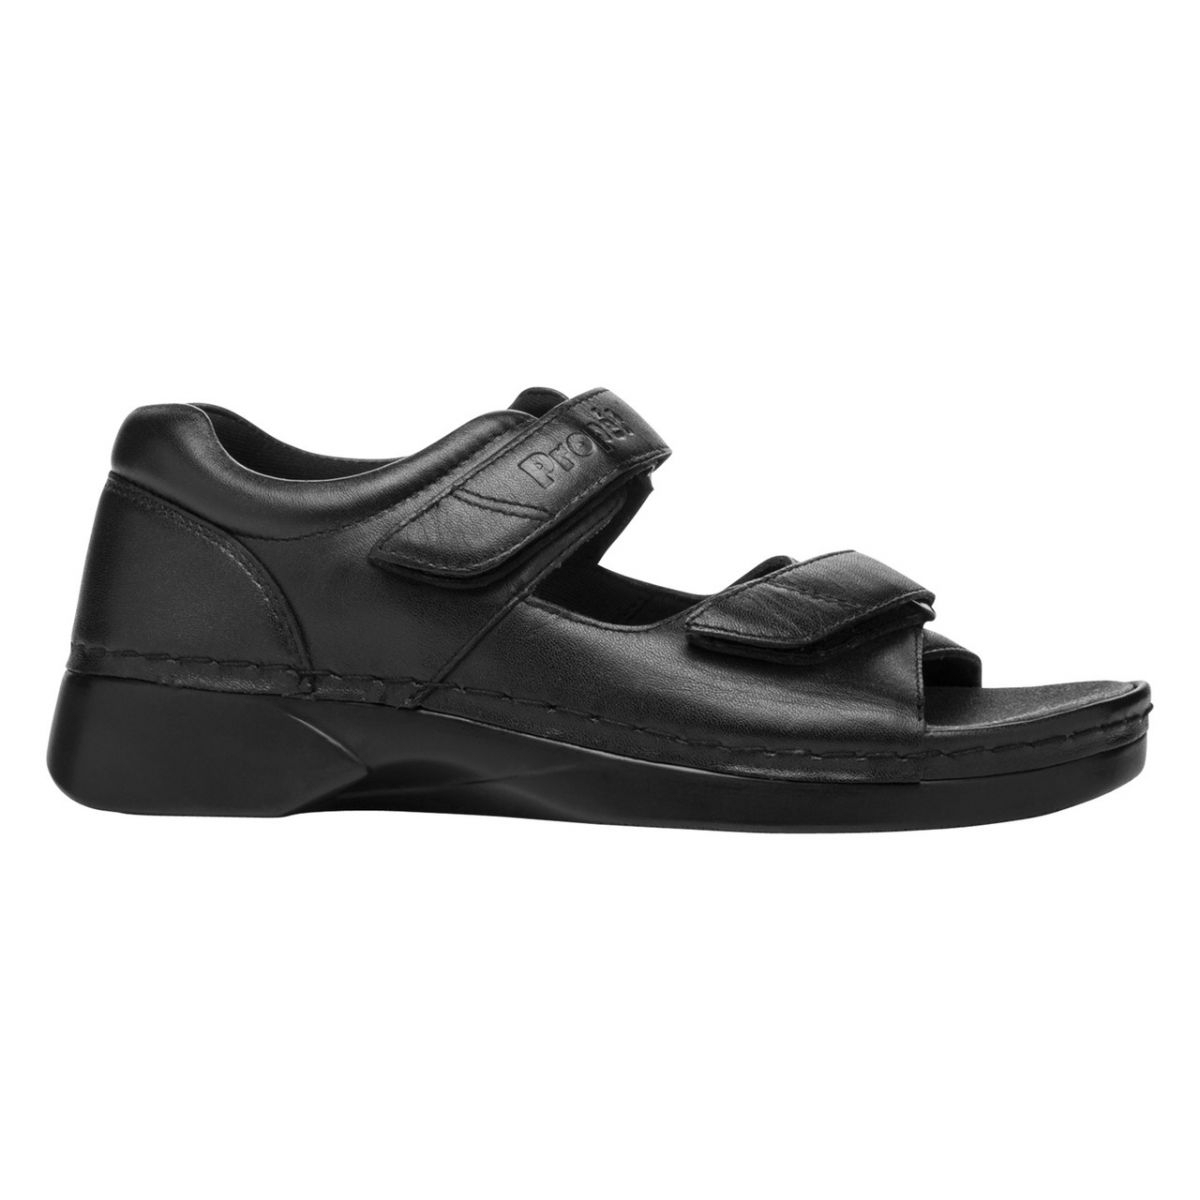 Propet Women's Pedic Walker Sandal Black - W0089B BLACK - BLACK, 8.5